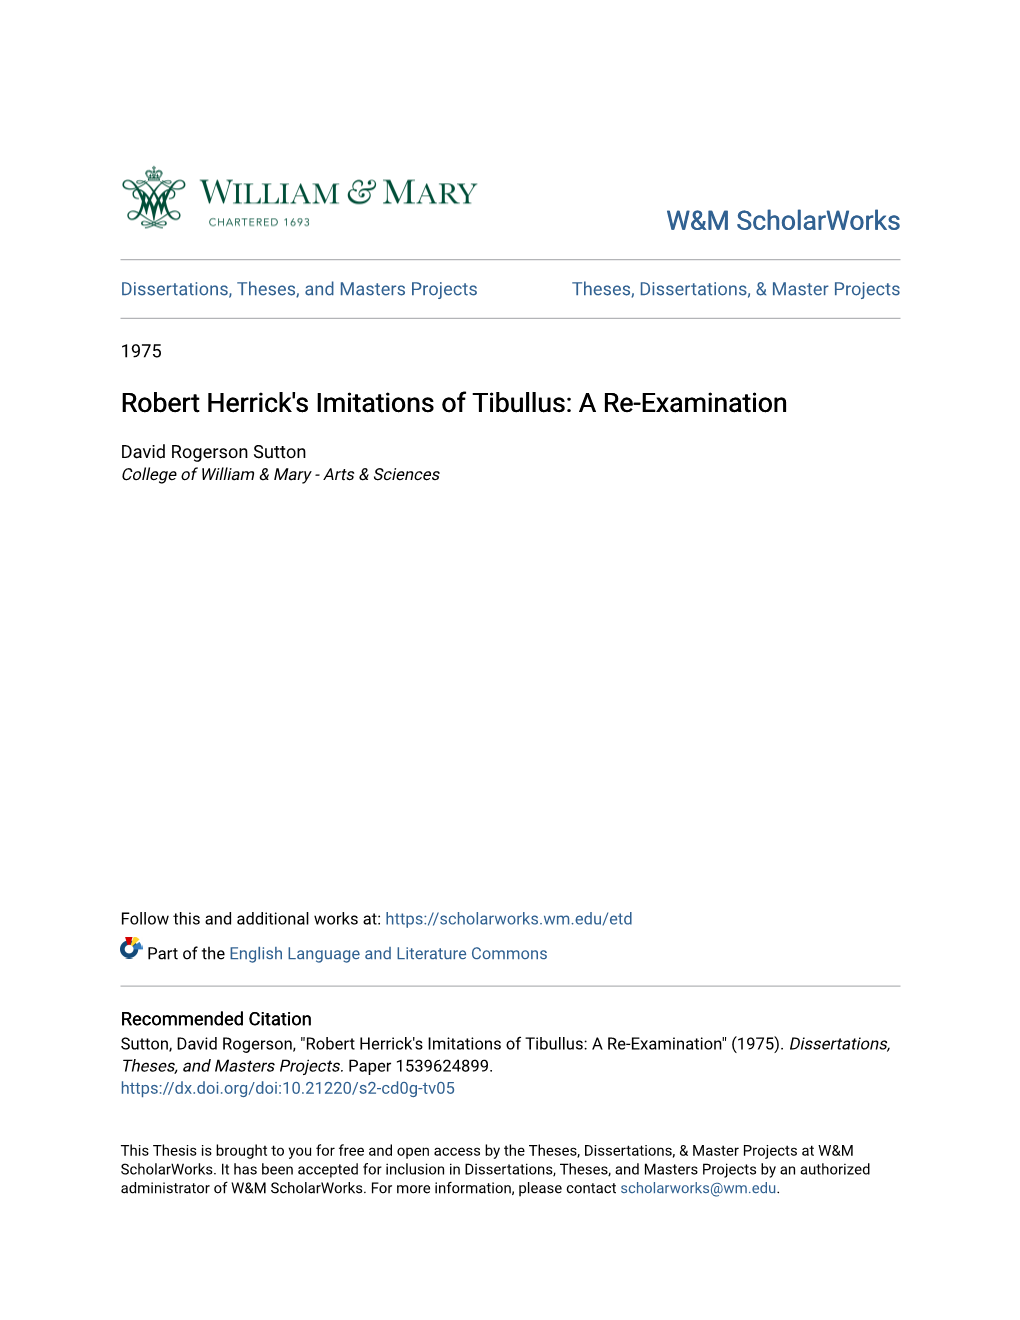 Robert Herrick's Imitations of Tibullus: a Re-Examination